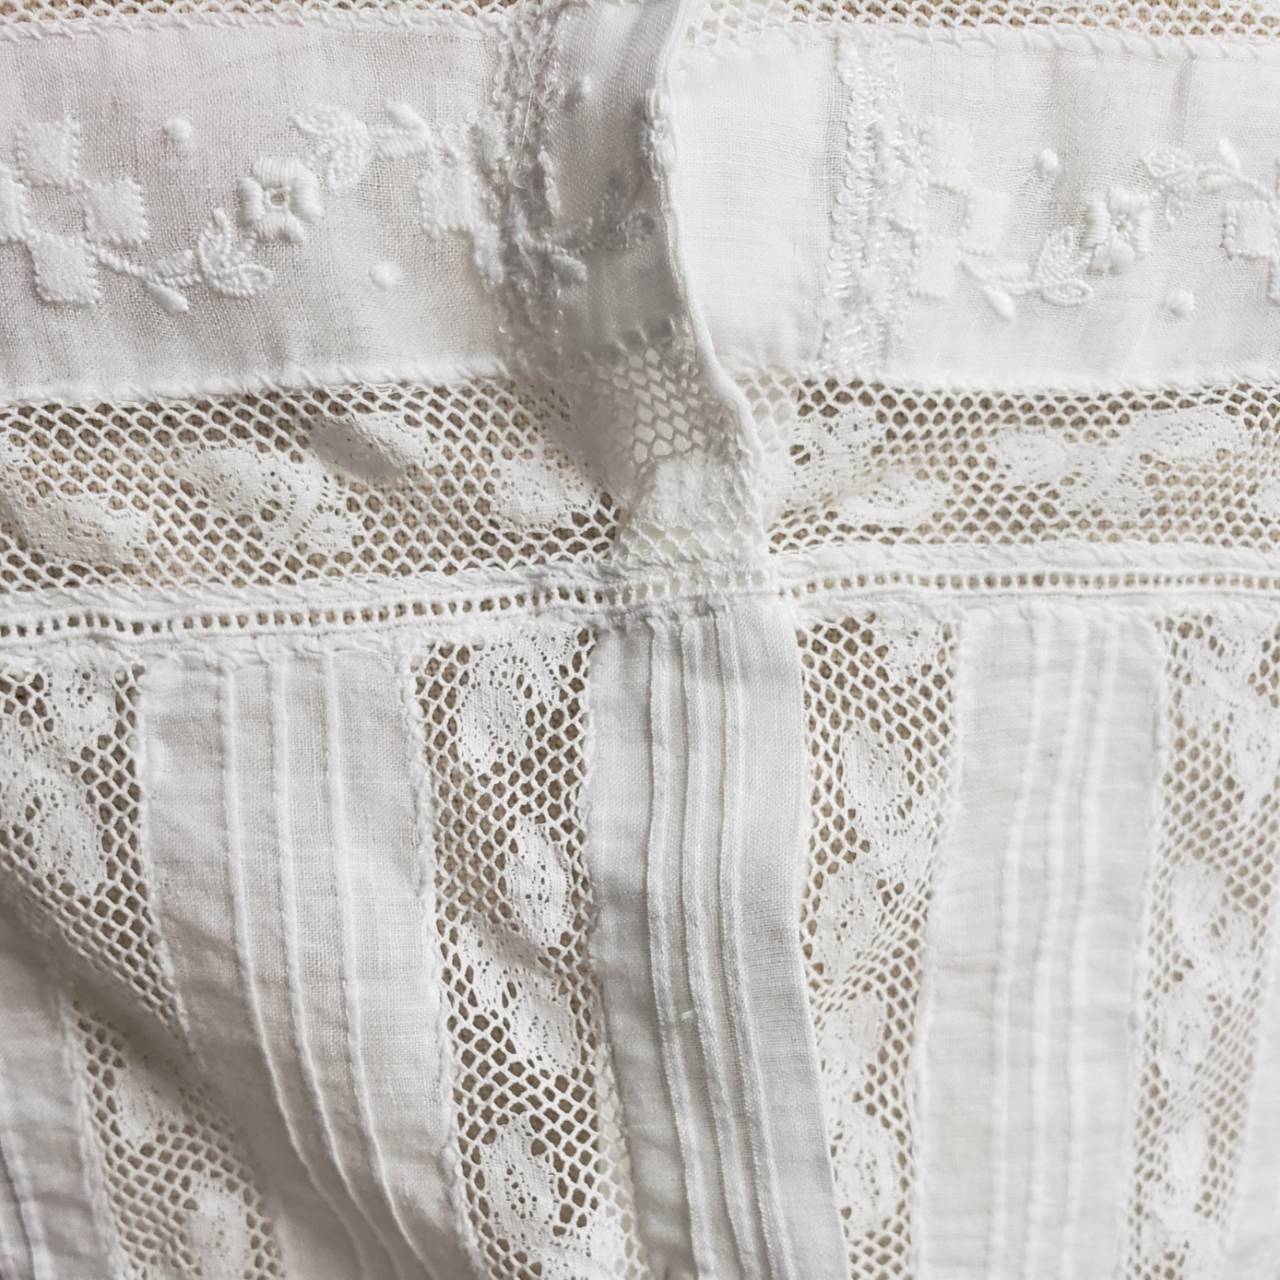 Euro Vintage(ヨーロッパヴィンテージ) Kasane_フレンチレースと刺繍を纏うキャミソール 表記なし(Mサイズ程度) ホワイト